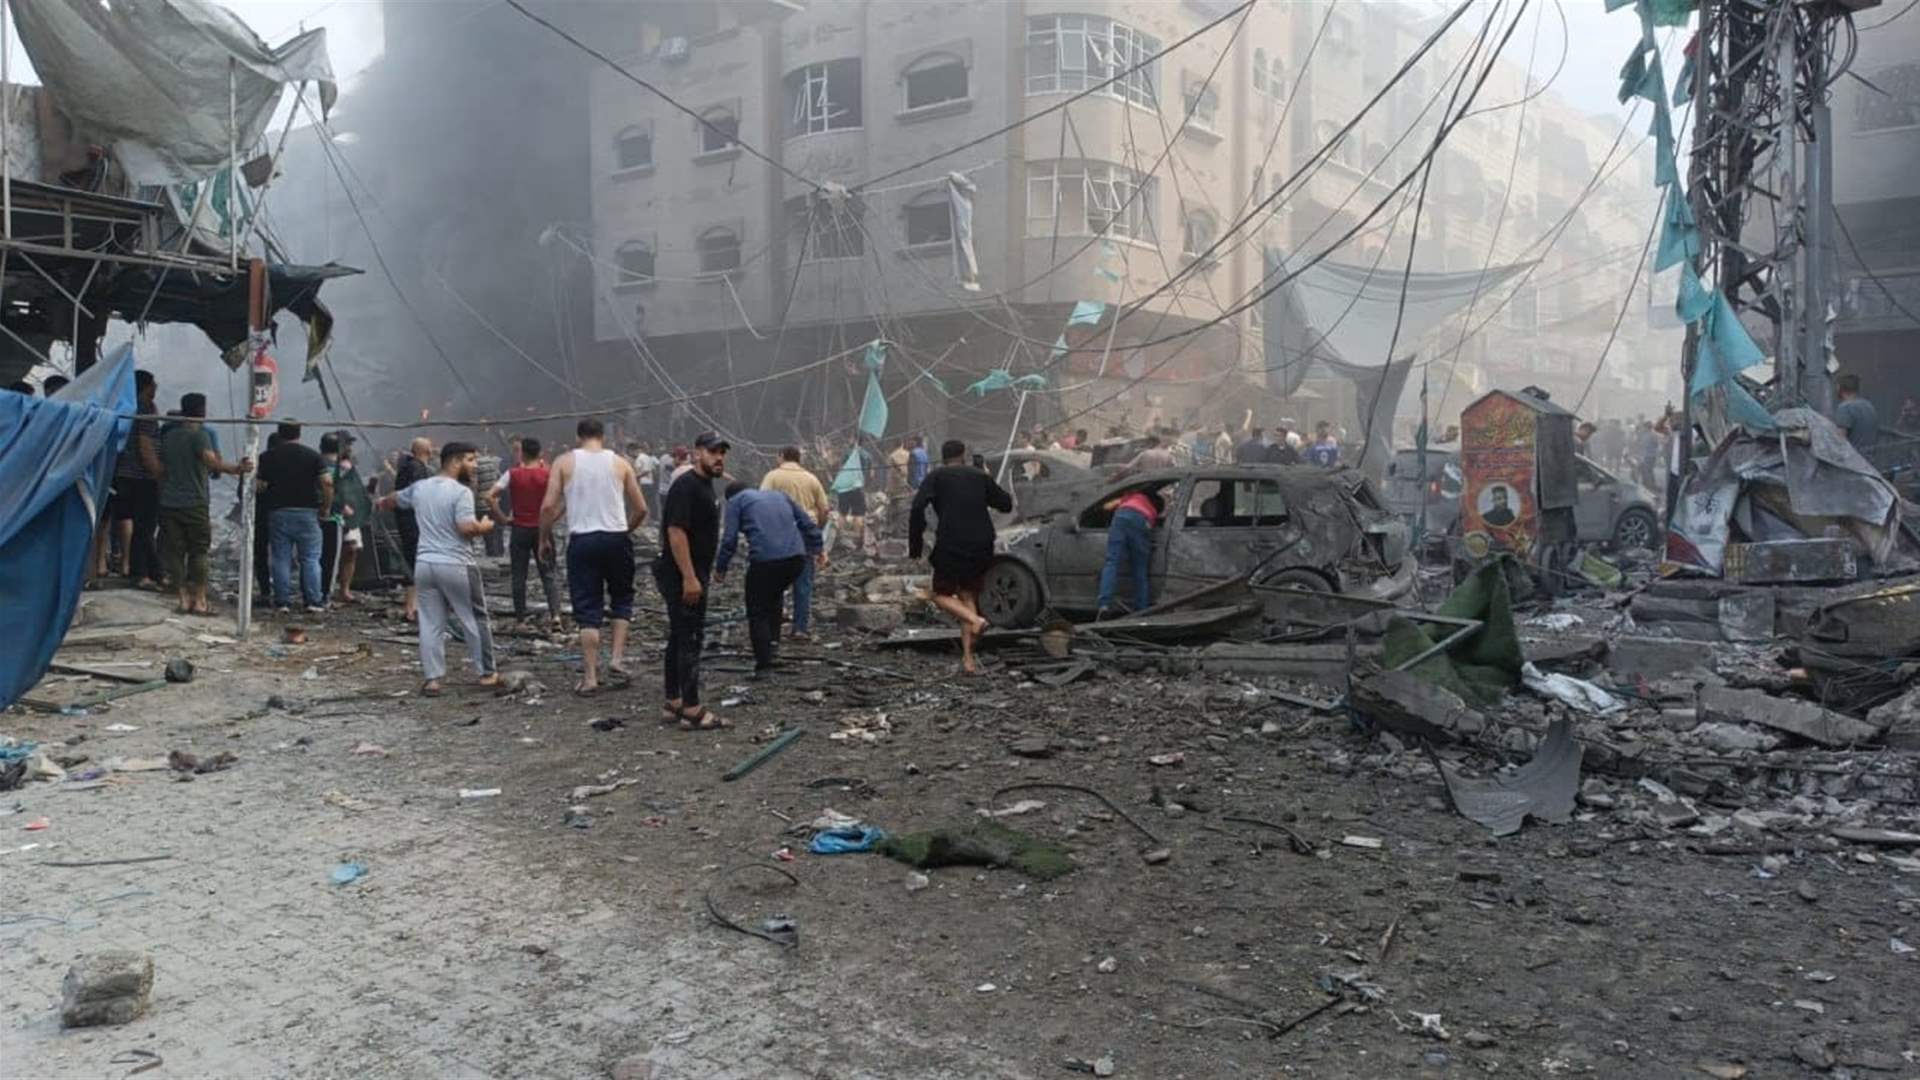 Al Arabiya: Israeli airstrikes on Jabalia refugee camp in Gaza killed more than 100 Palestinians